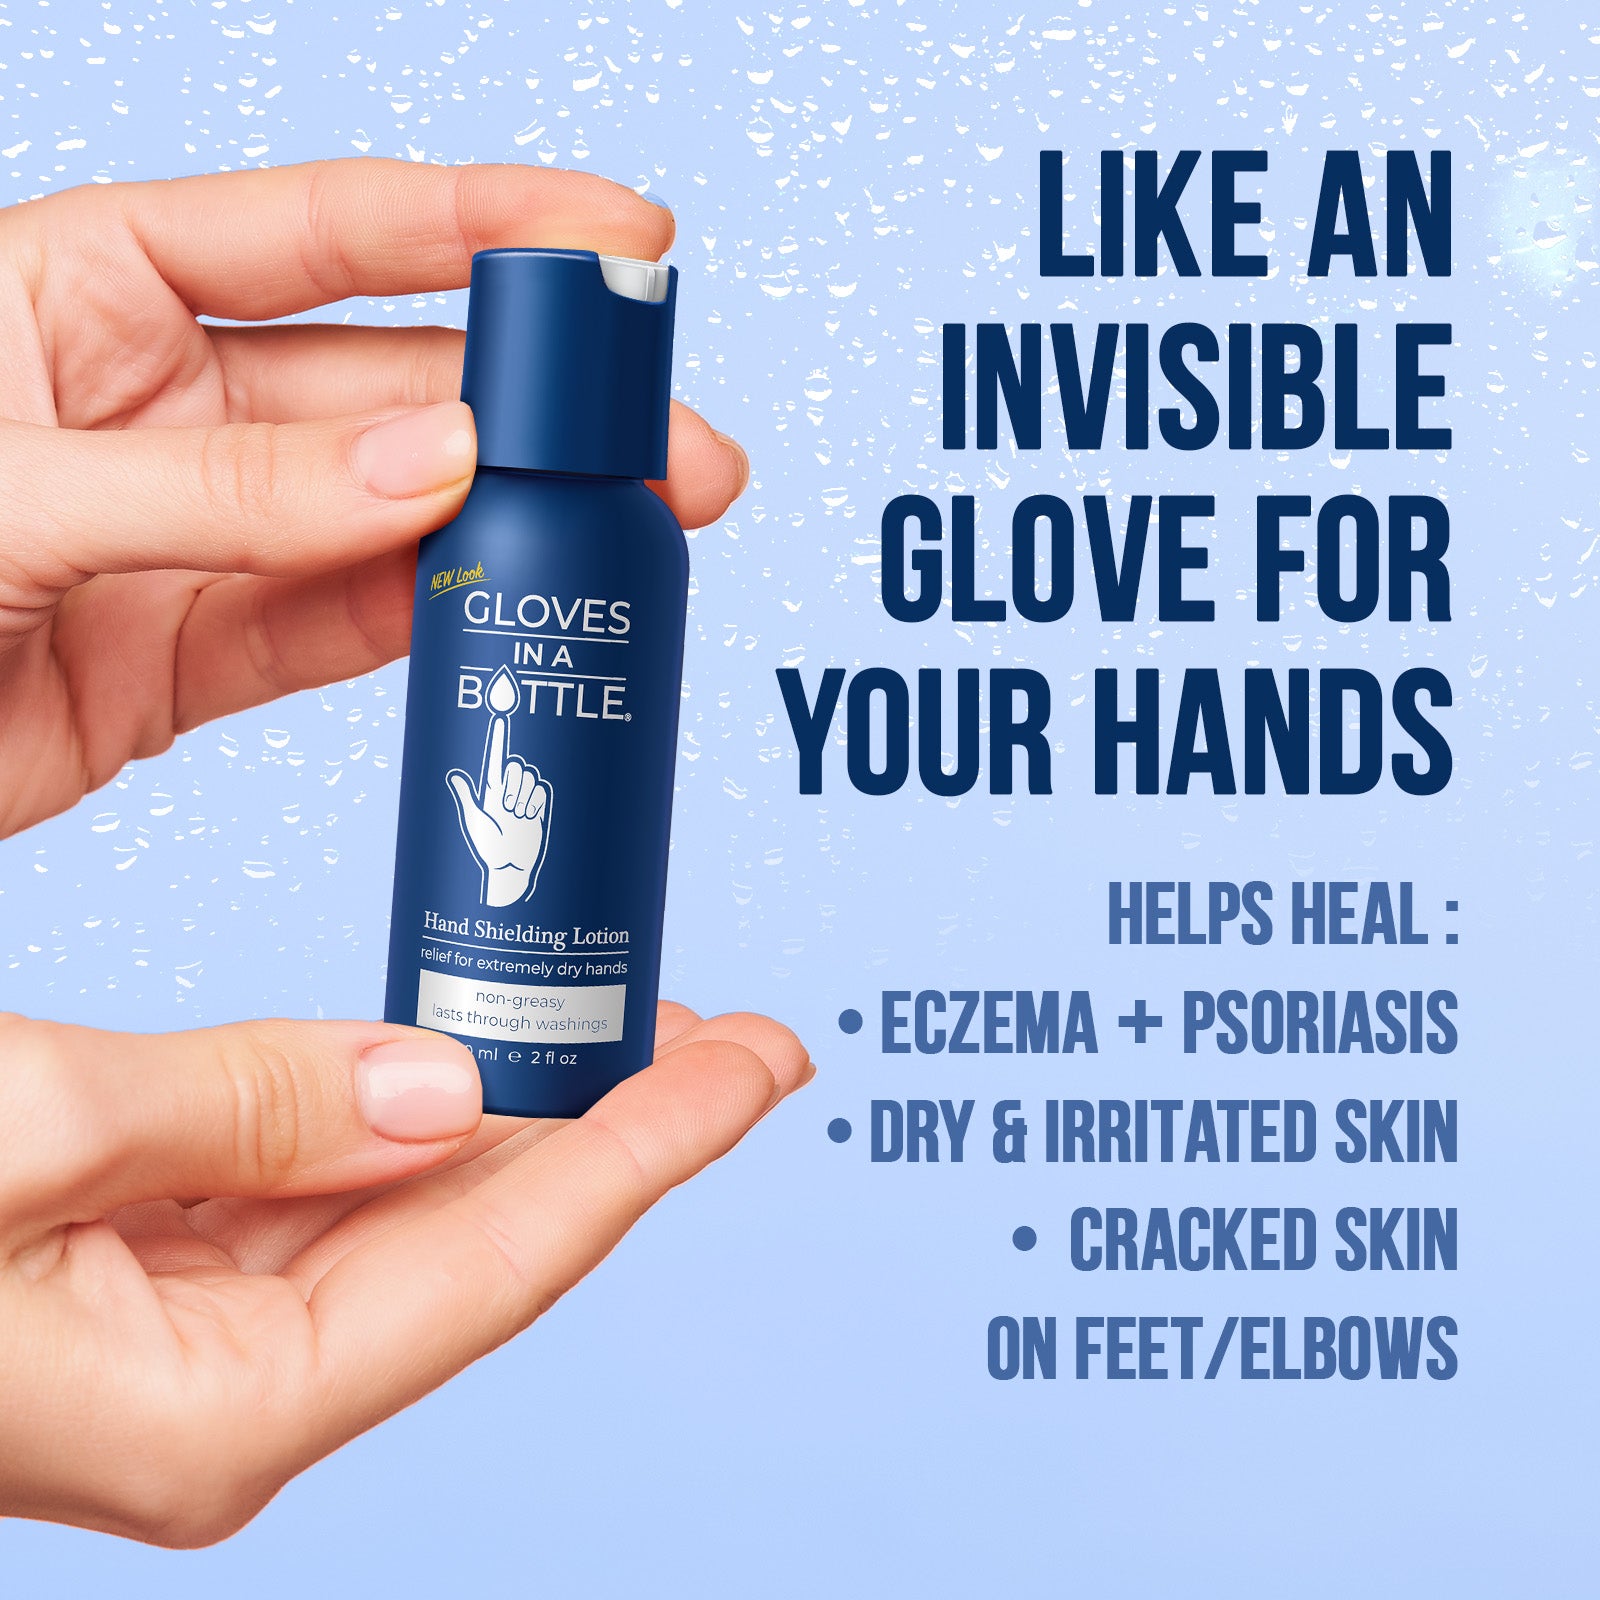 Gloves In A Bottle "Shield Your Skin" Kit